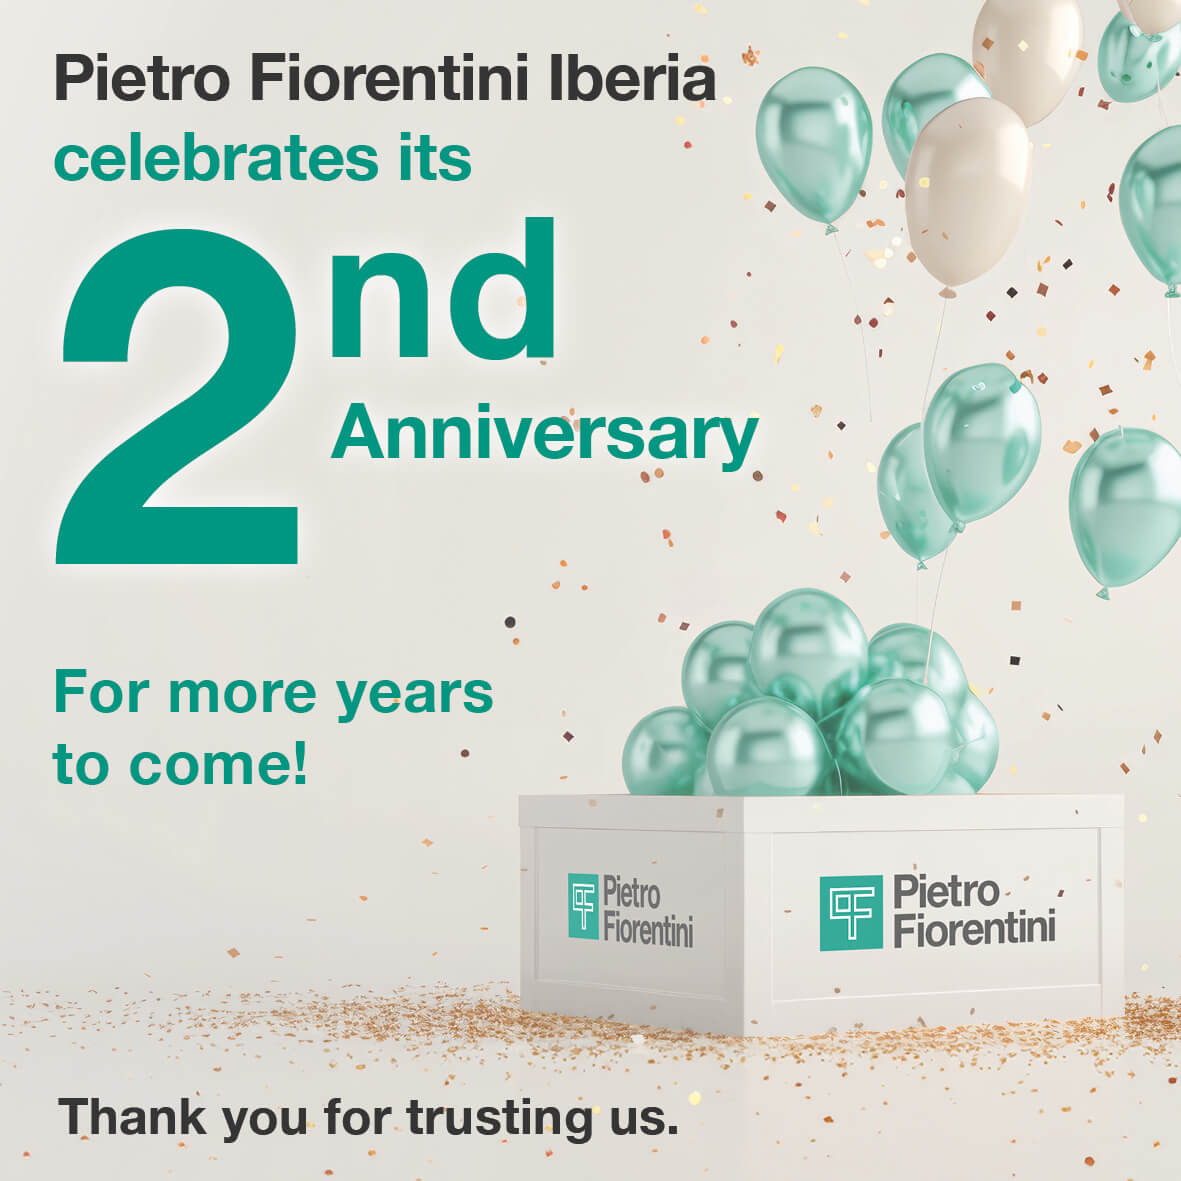 Pietro Fiorentini Iberia celebrates its 2nd anniversary